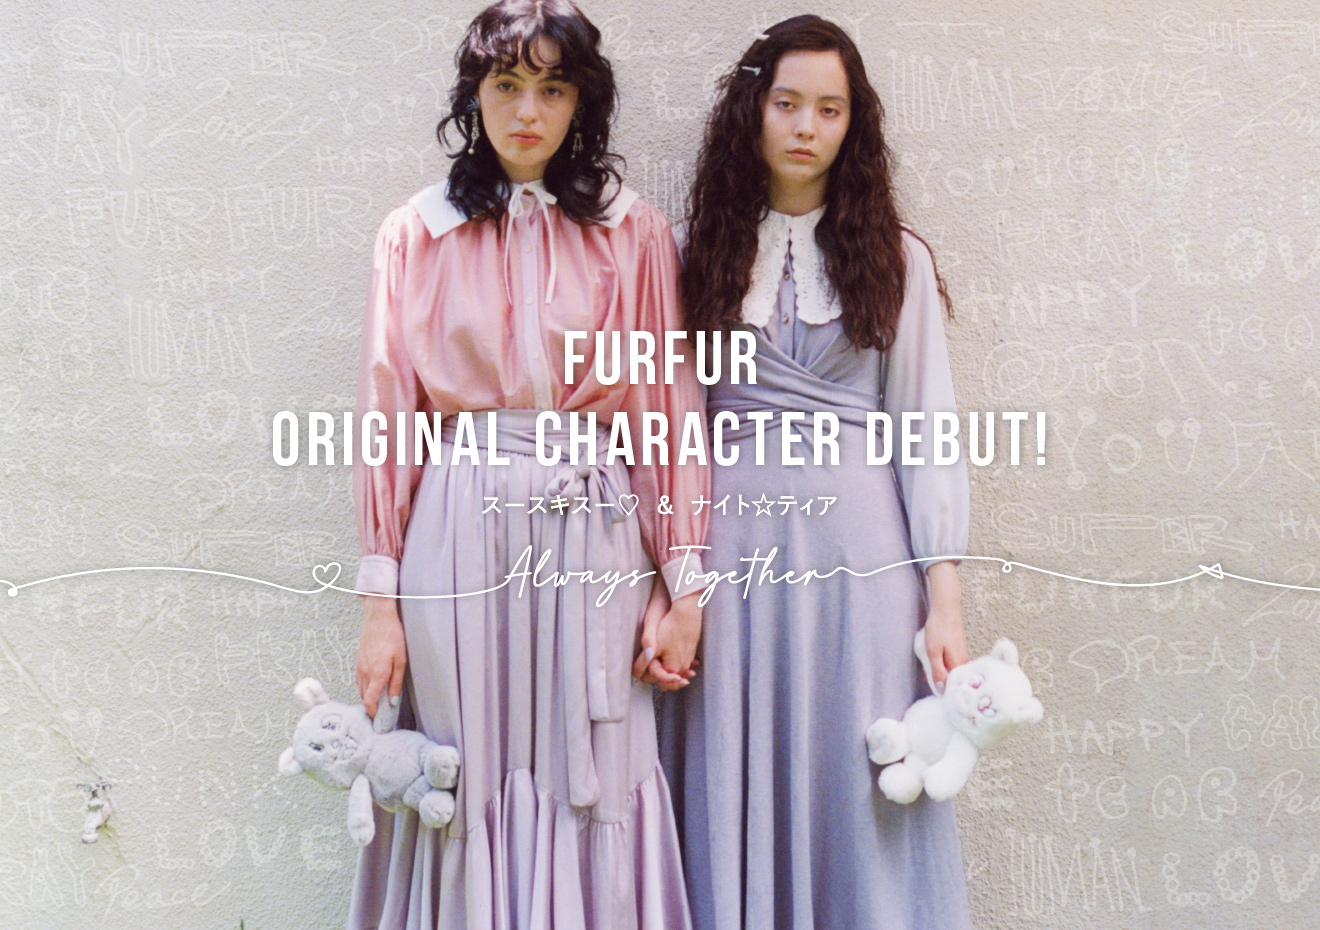 Fashion Brand FURFUR Announces First Original Characters, Plushies